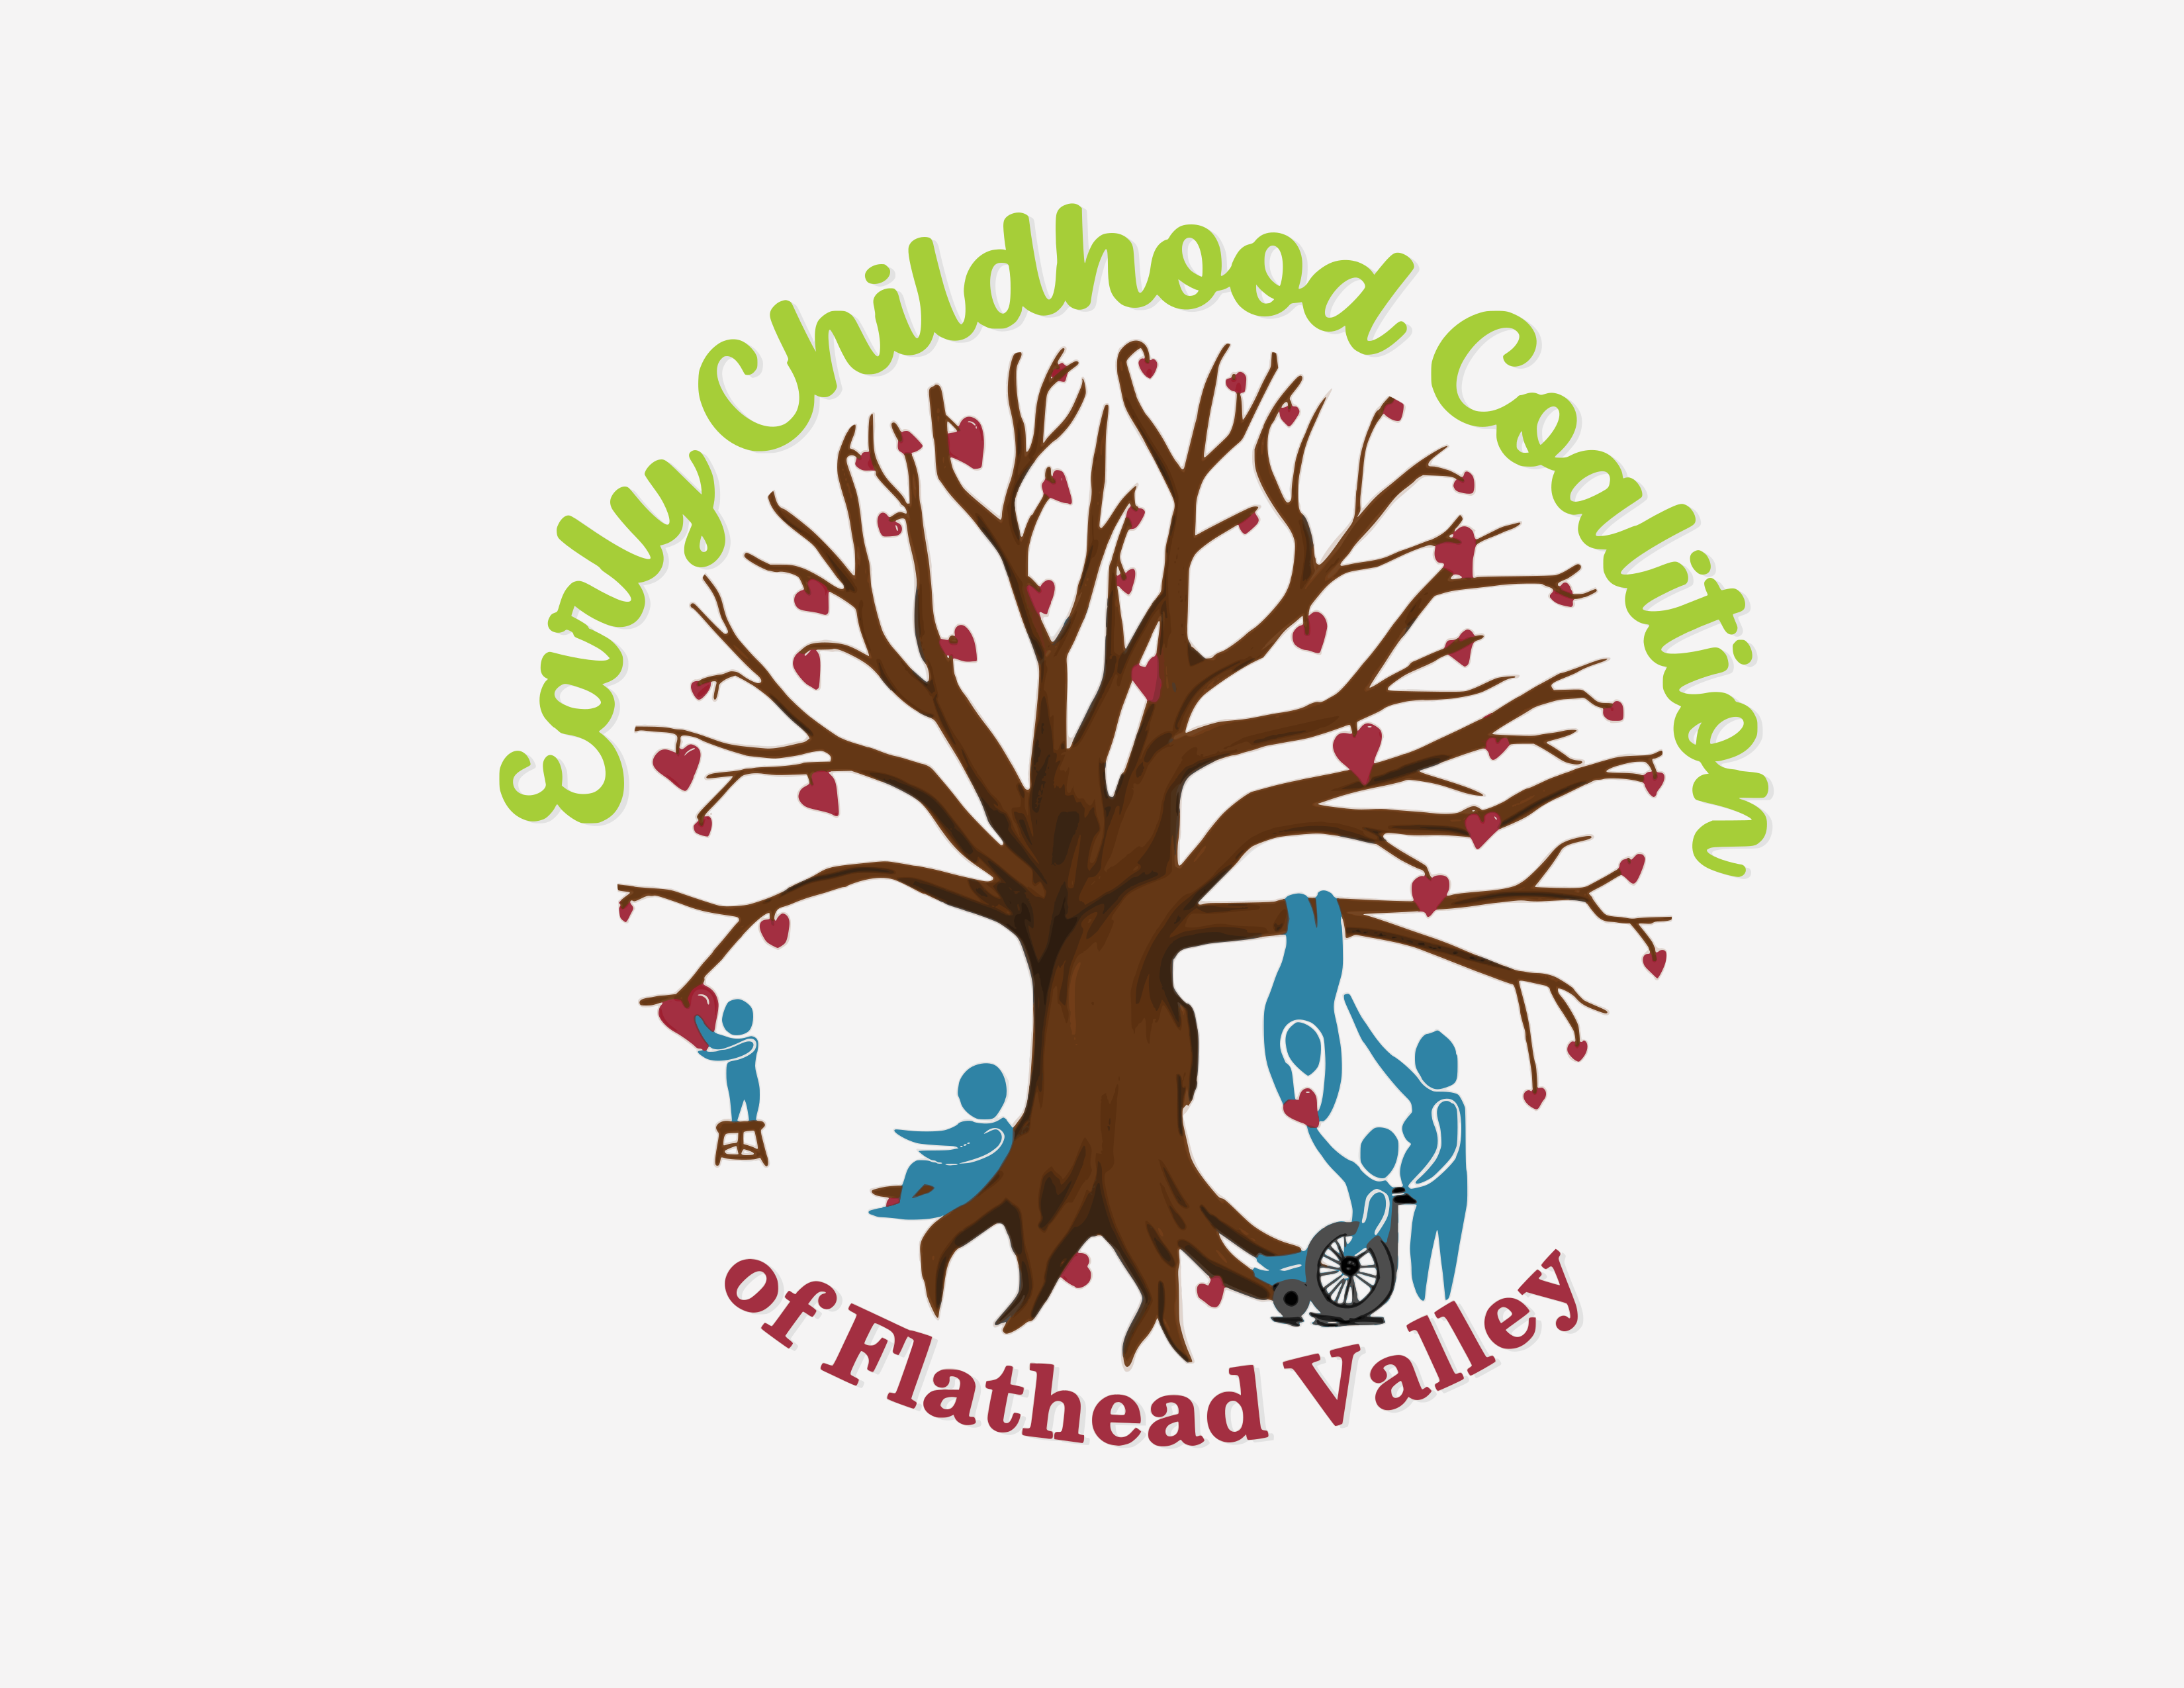 Early Childhood Coalition of Flathead Valley